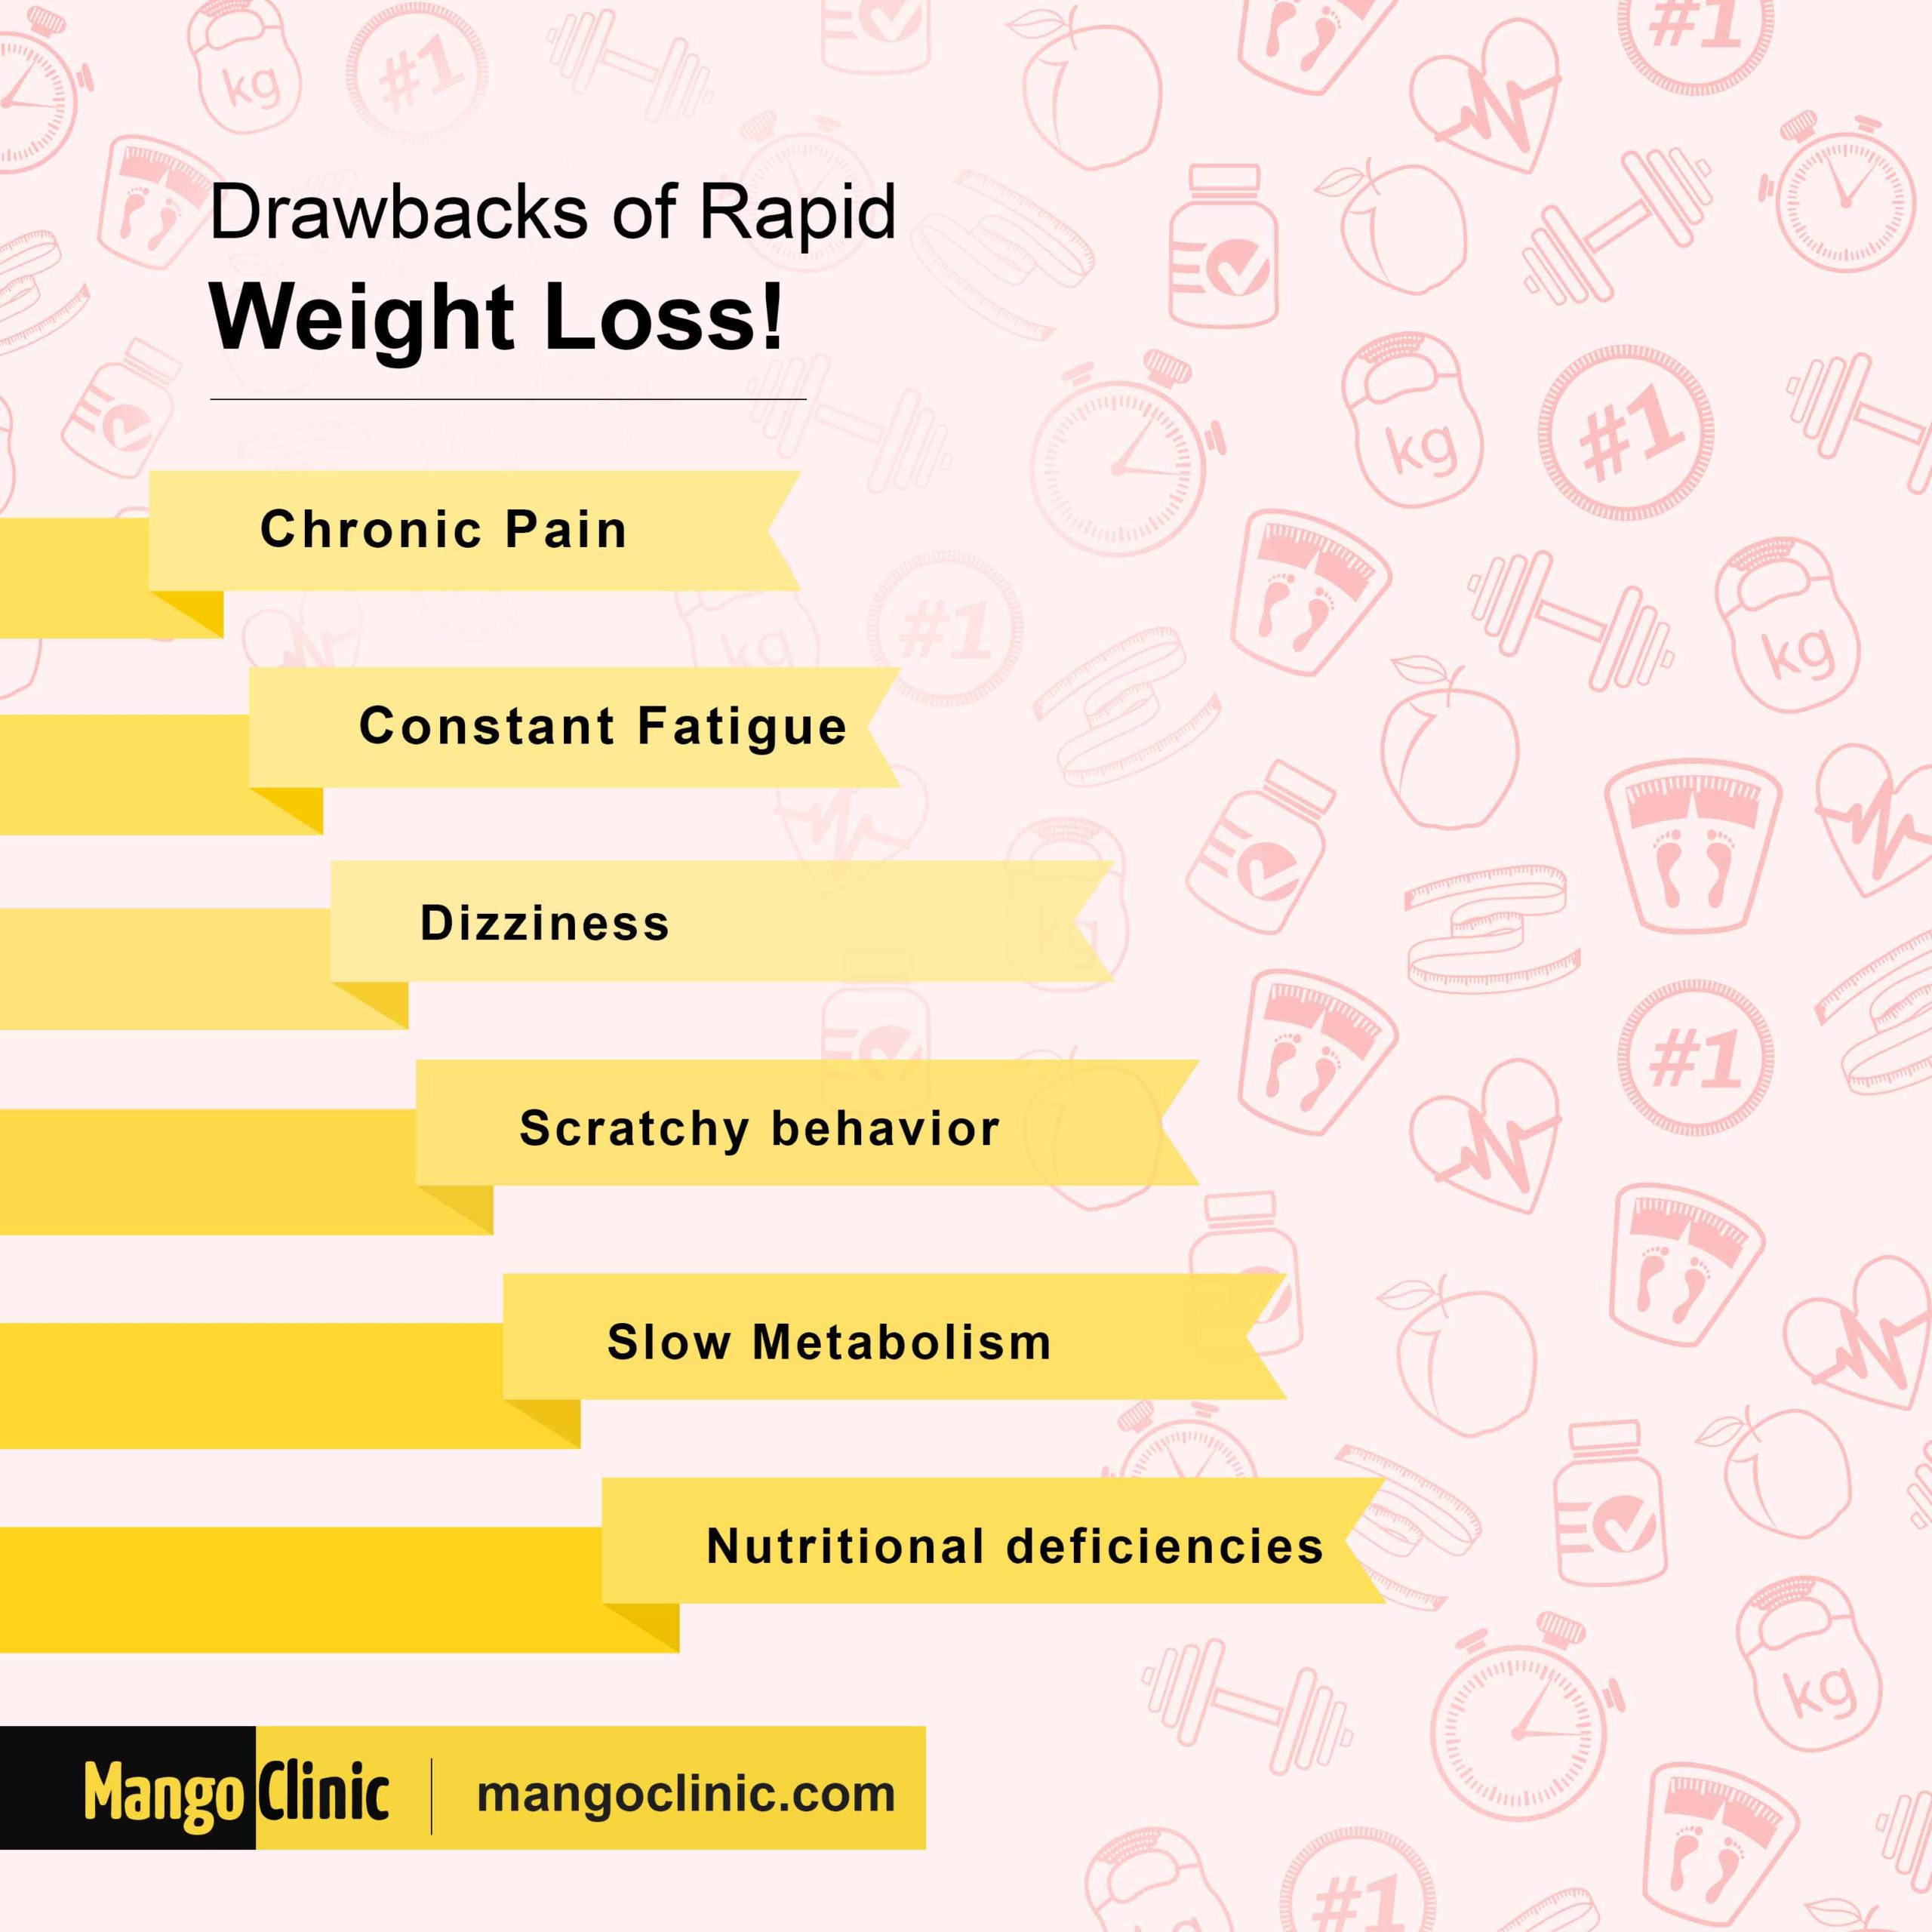 Drawbacks of Rapid Weight Loss